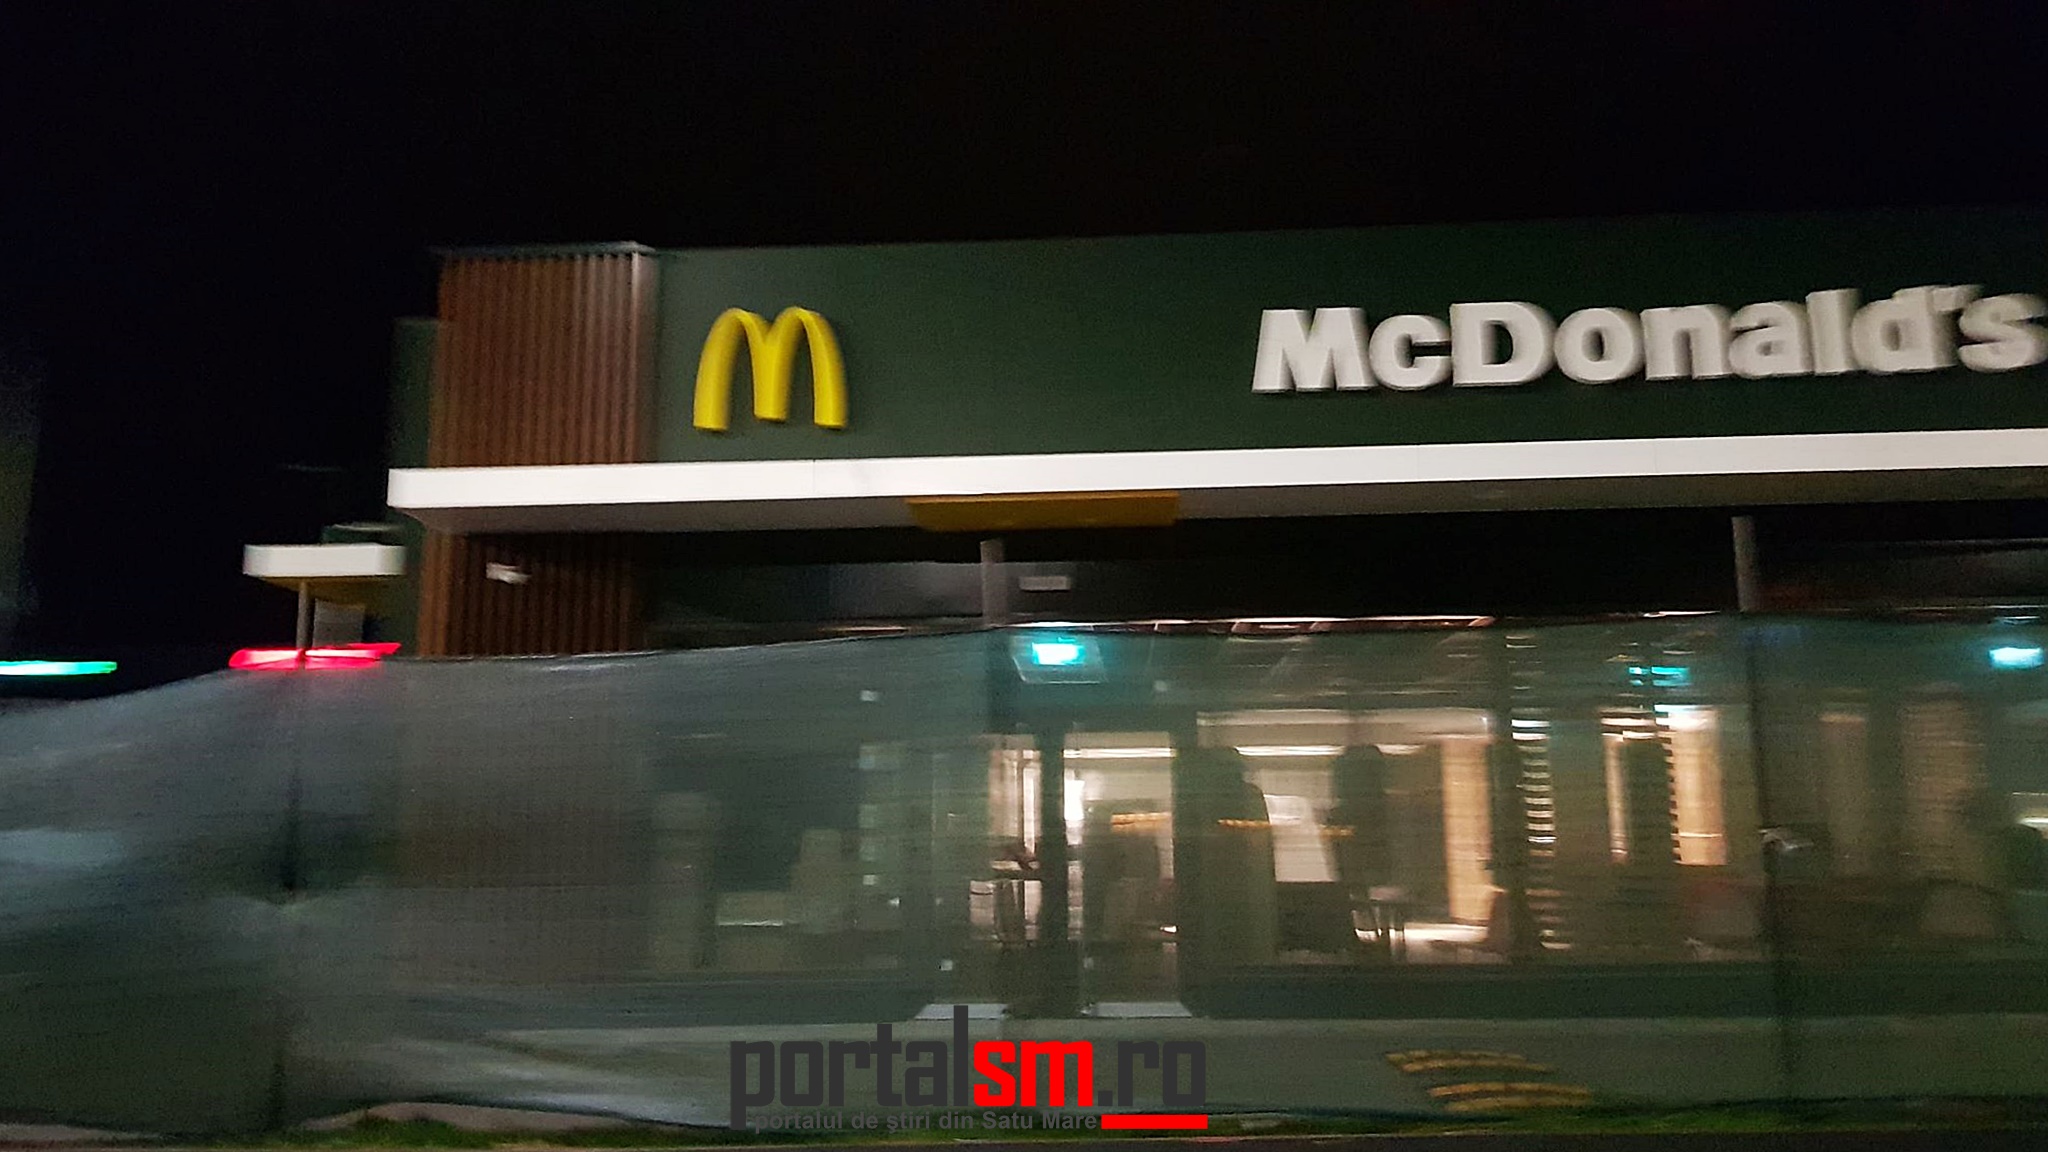 Stirile din presa locala despre McDonalds | makeup-store.ro